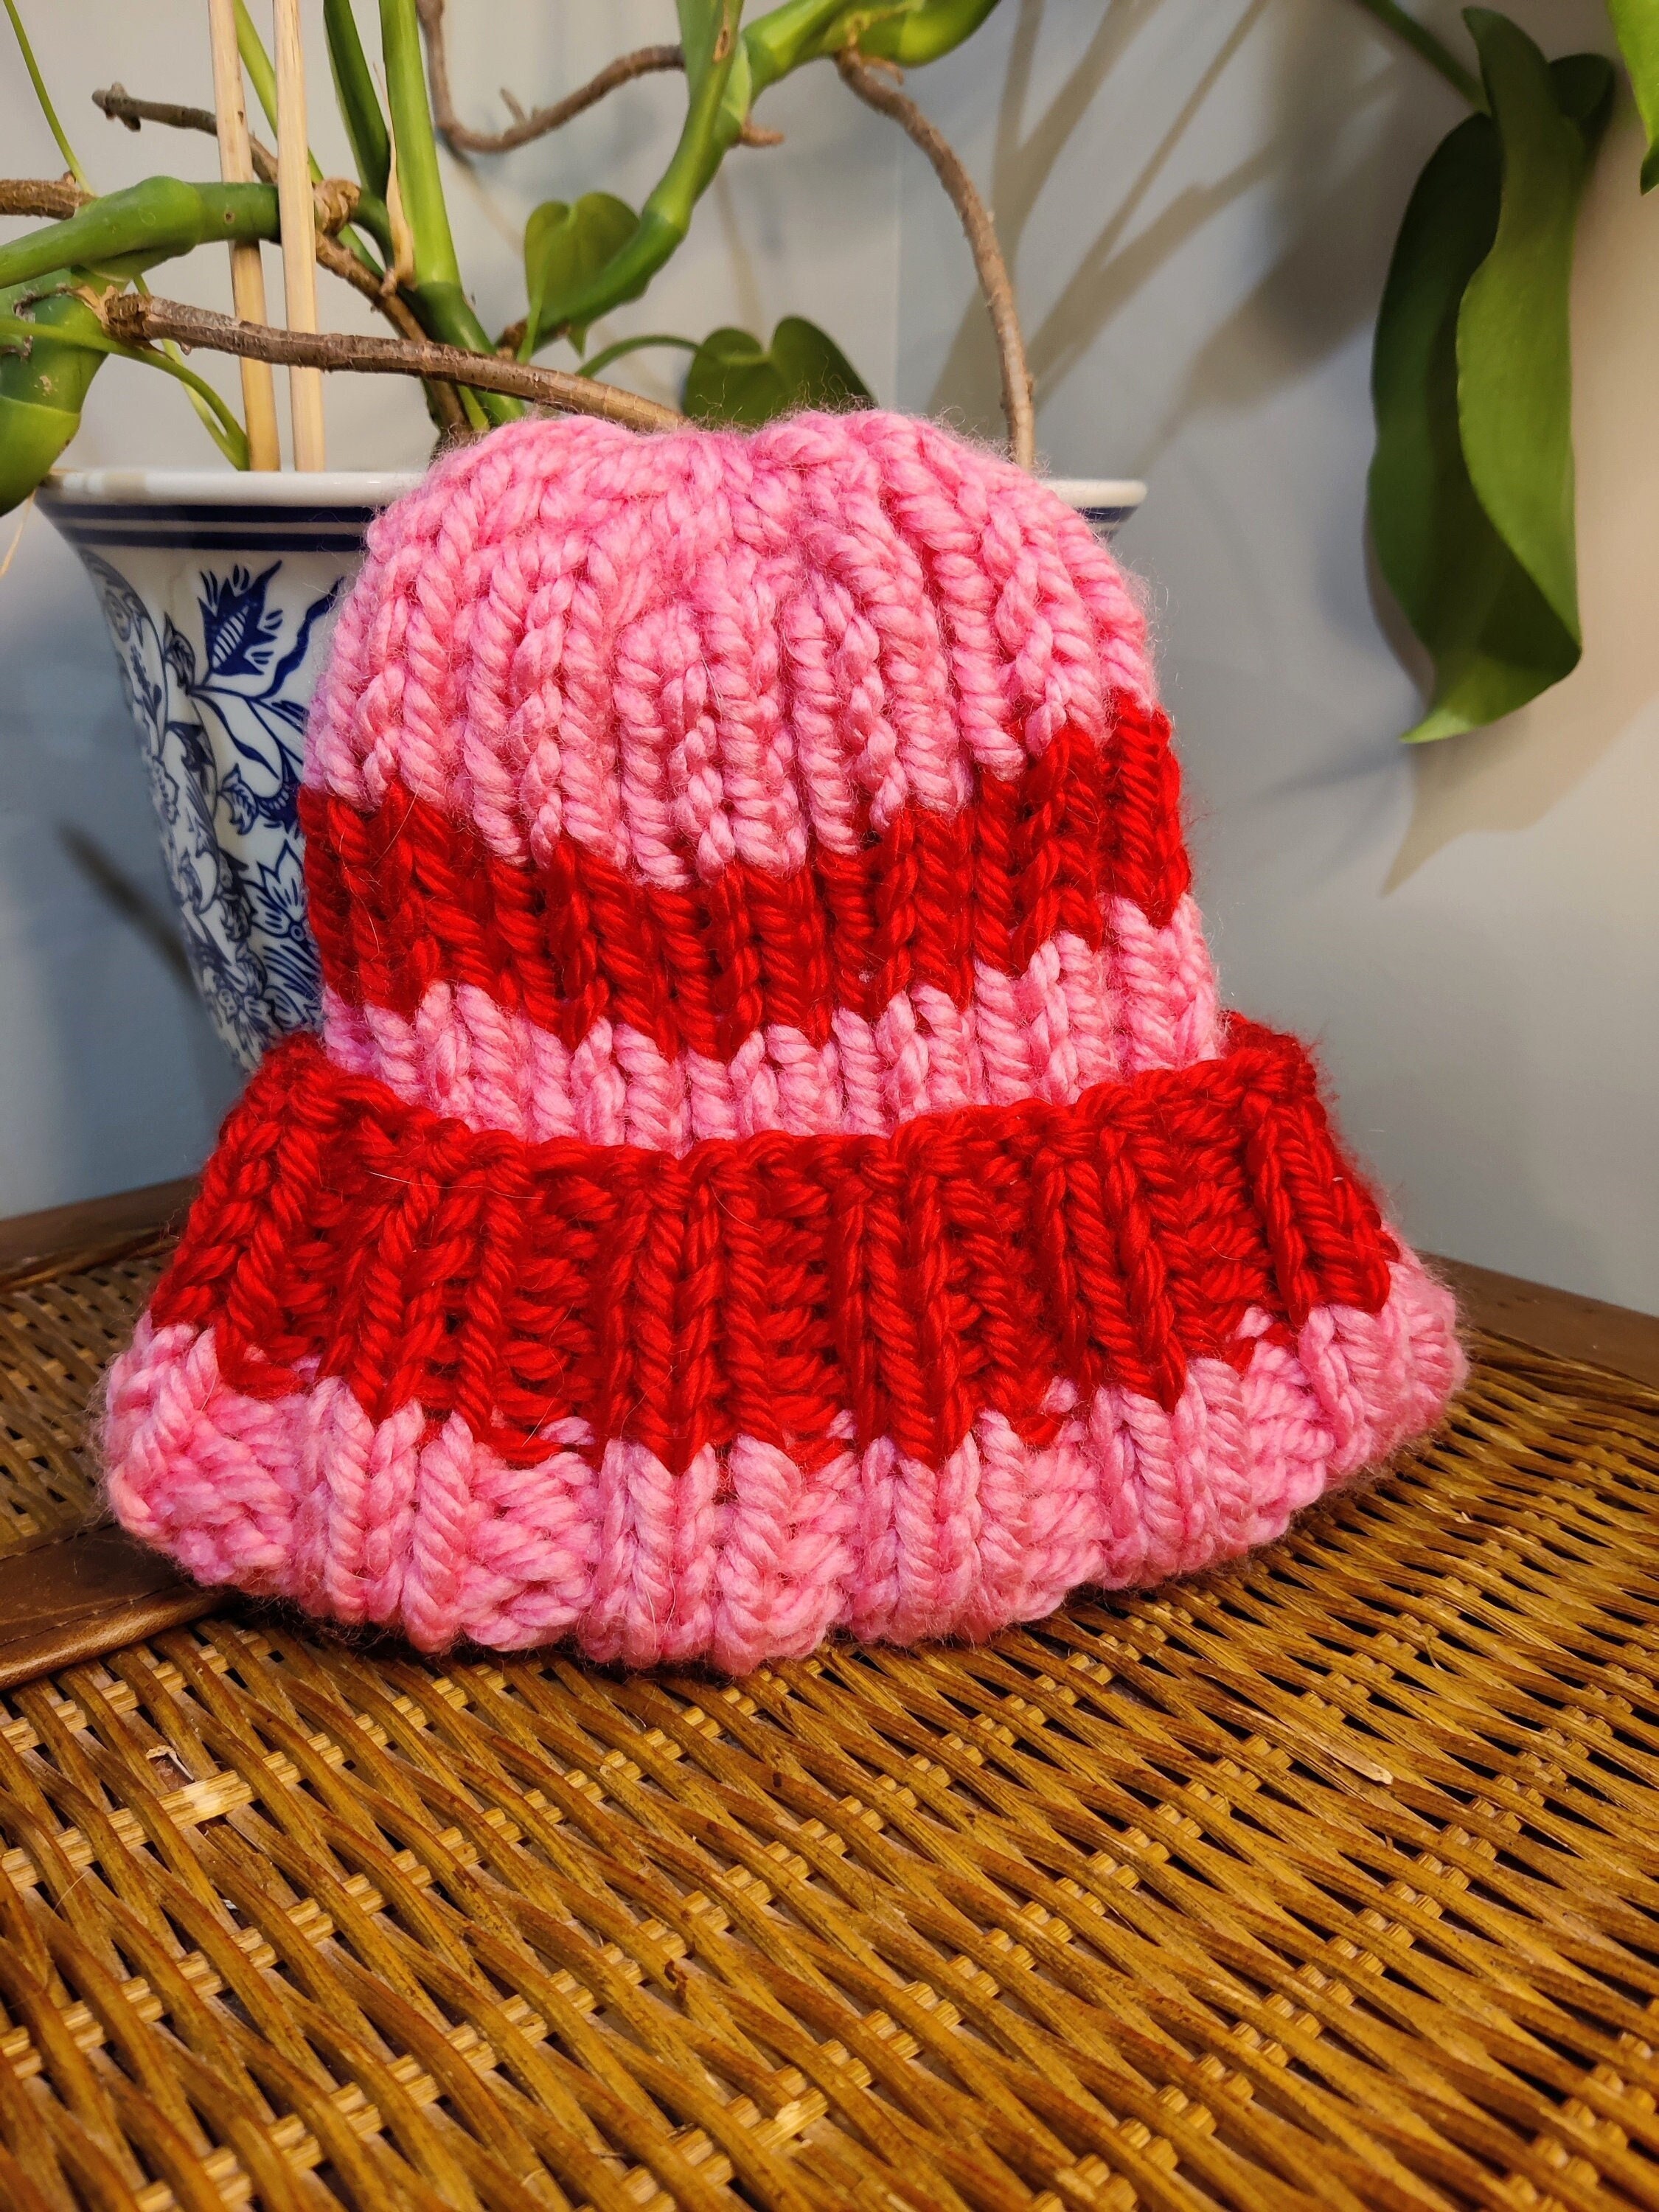 CROCHET PATTERN Louise Belcher Hat Crochet Girl Halloween - Inspire Uplift